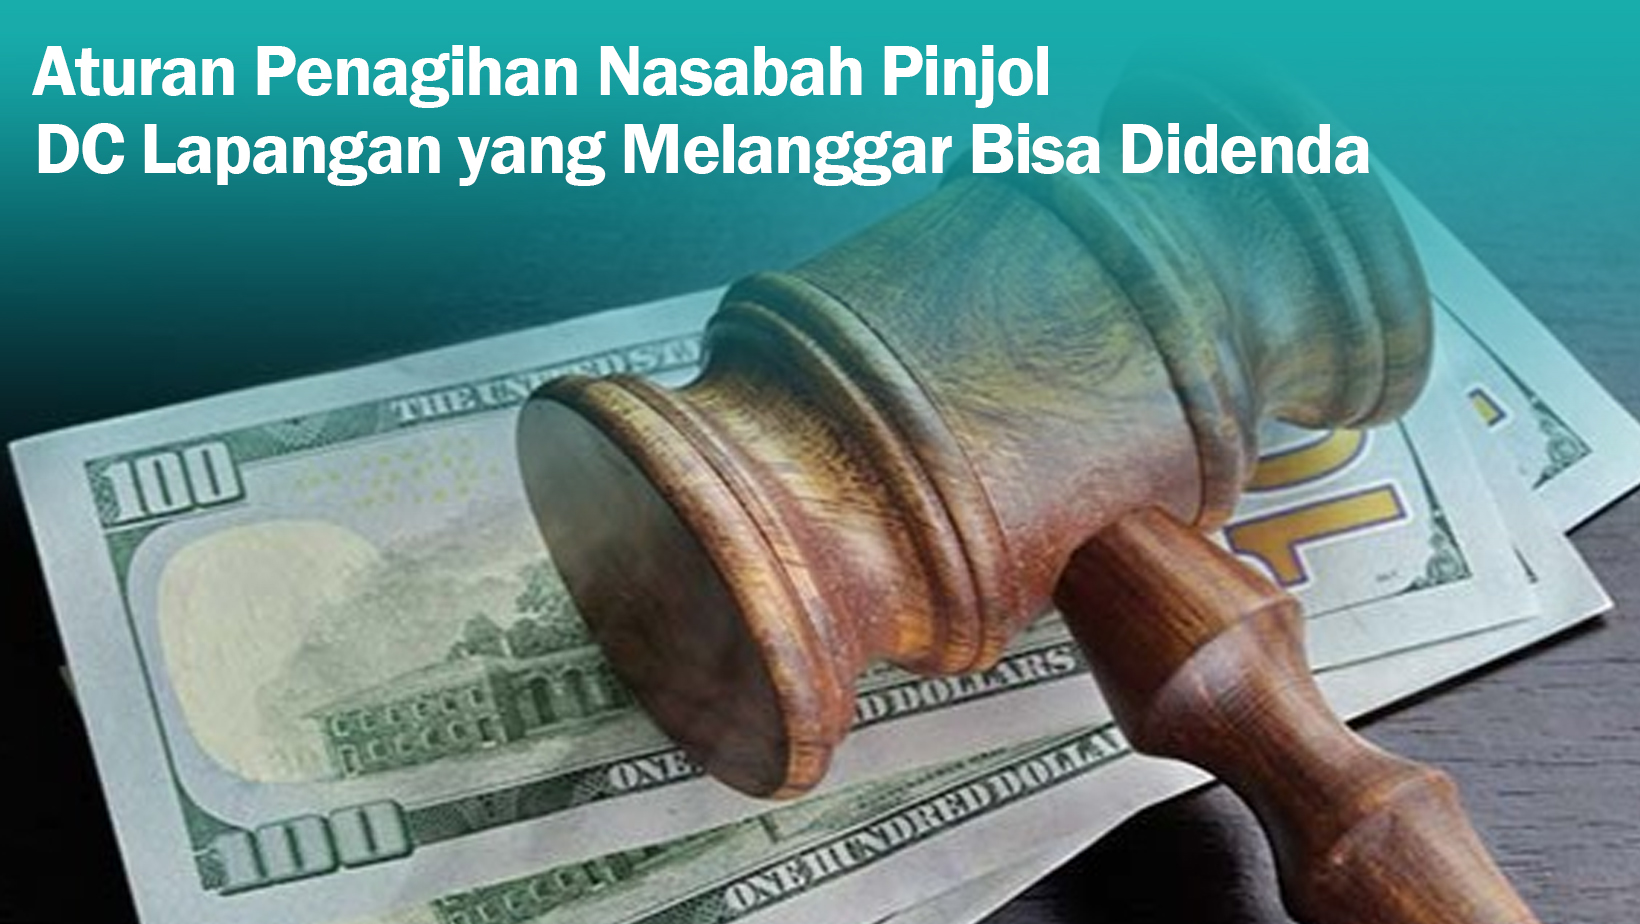 Tuman! Debt Collector yang Langgar Aturan Penagihan Nasabah Pinjol Bisa Didenda Rp15 Miliar